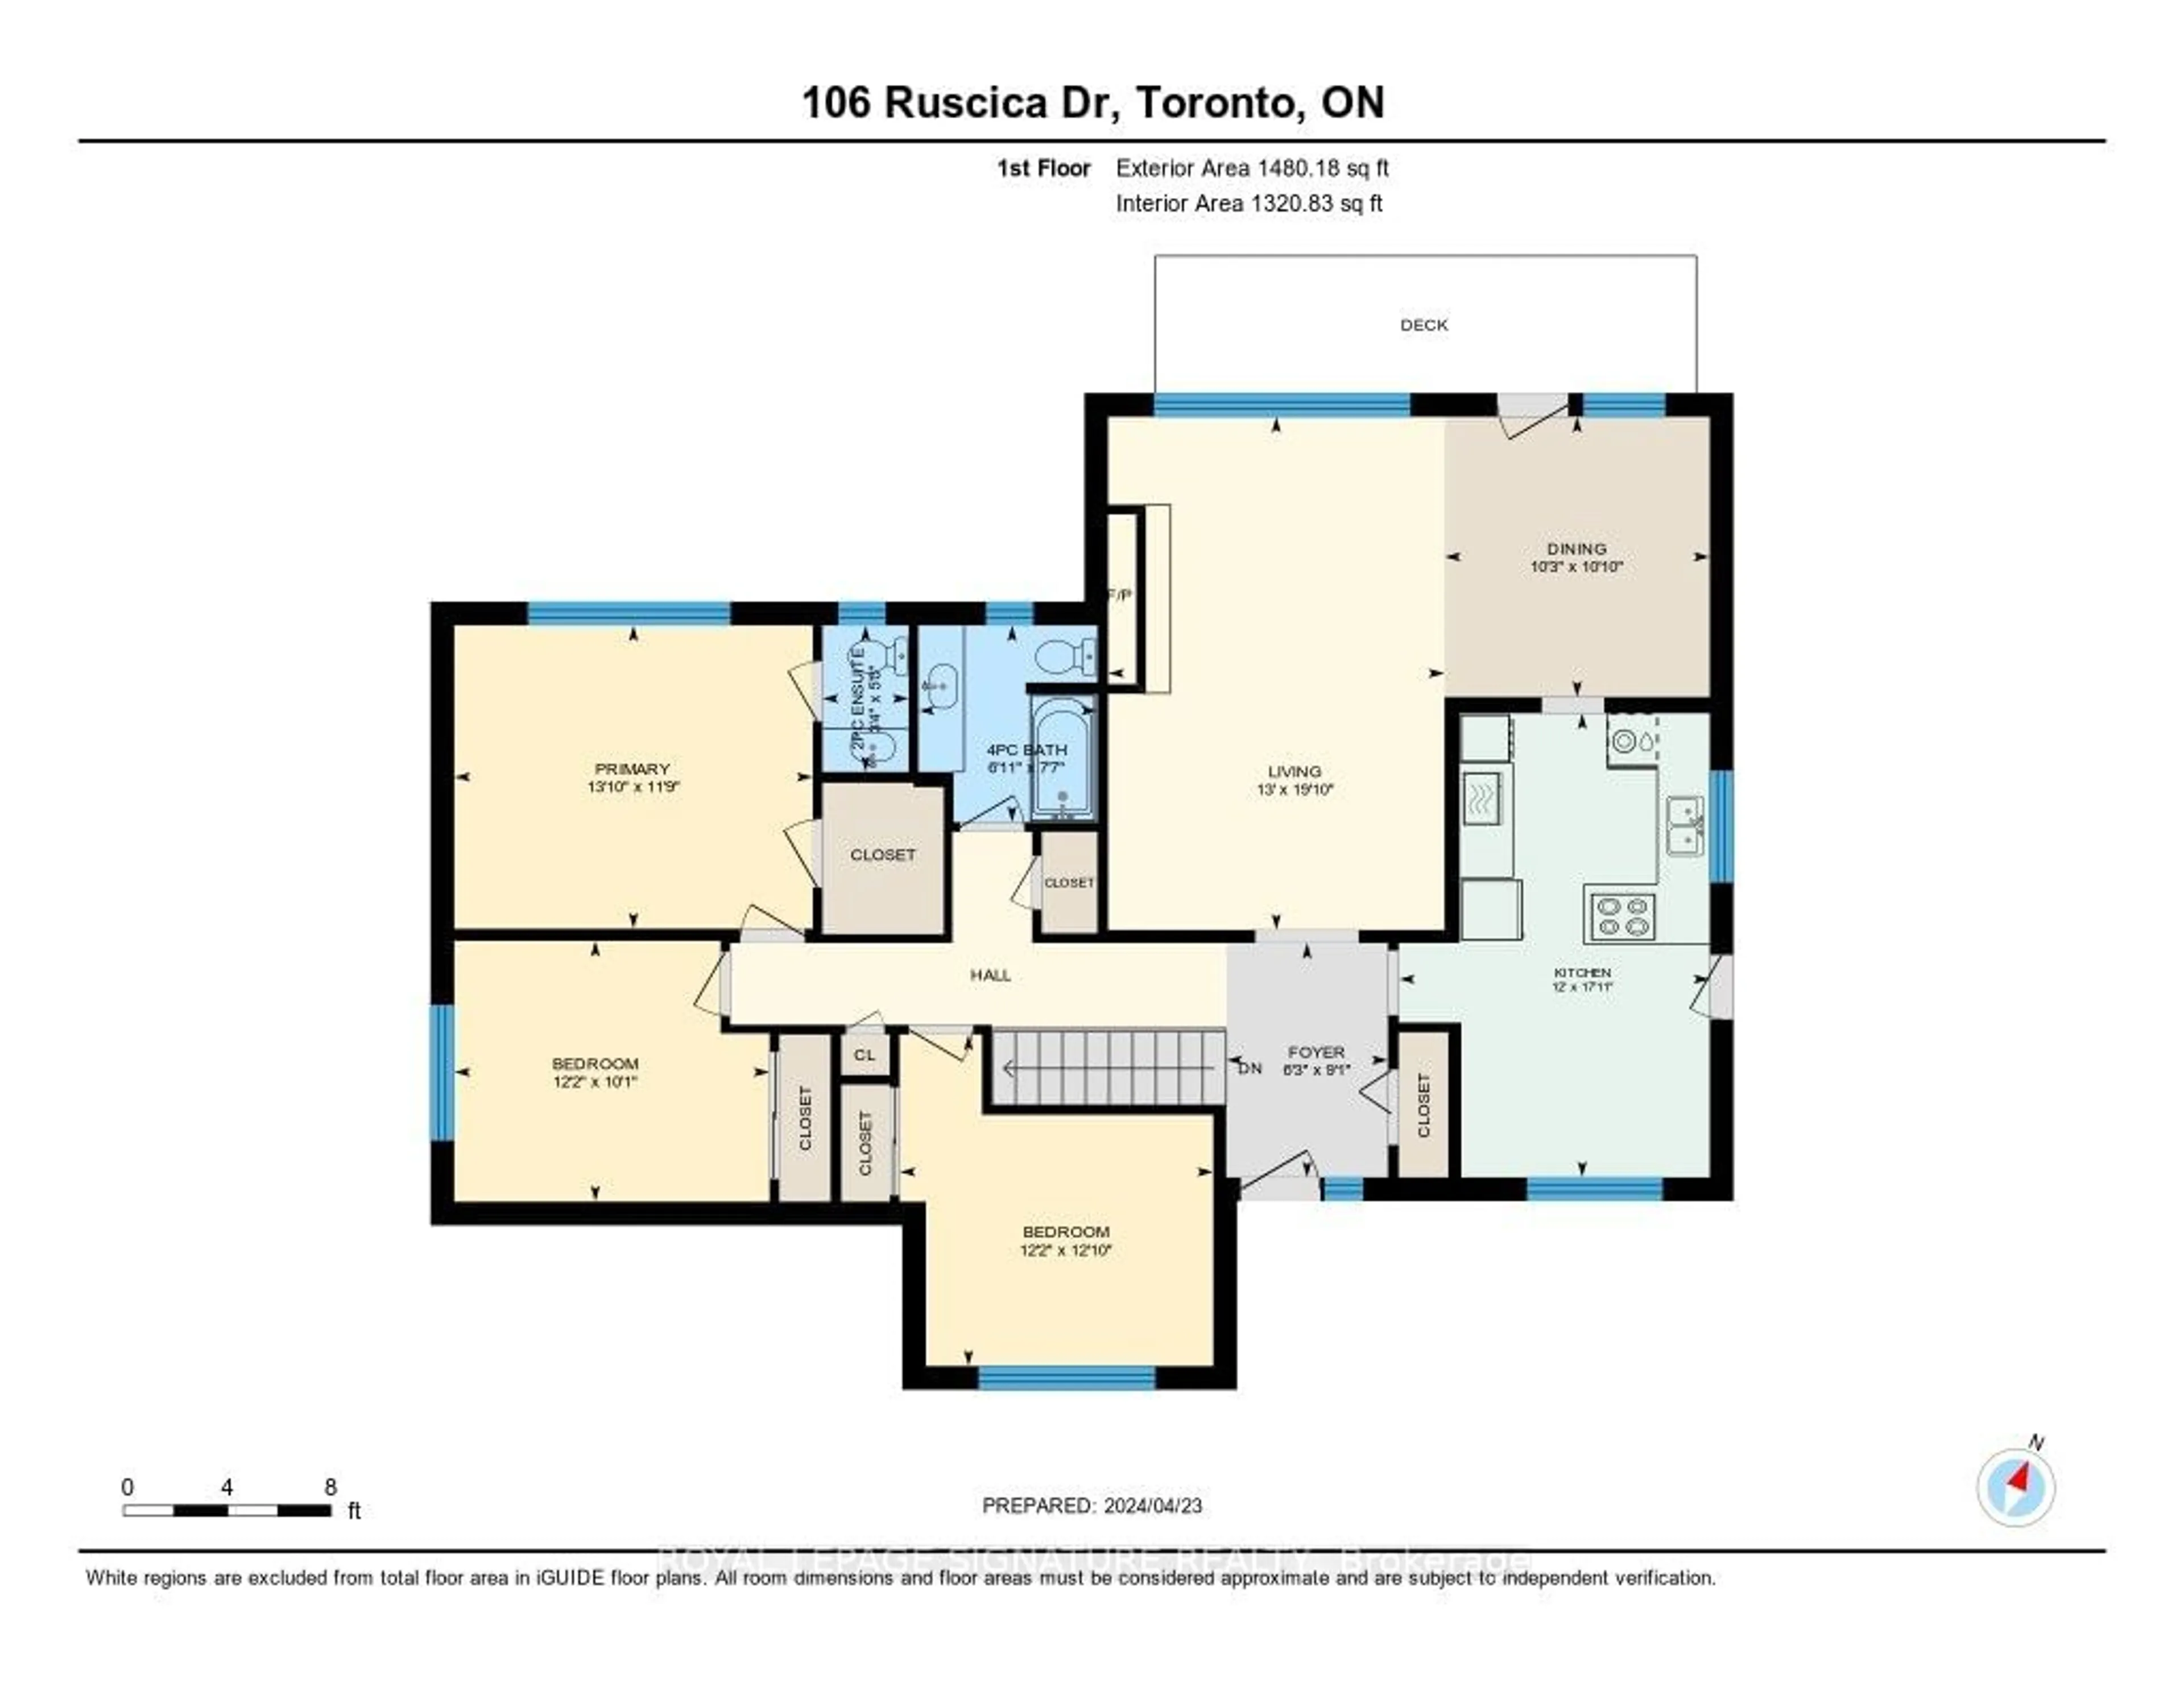 Floor plan for 106 Ruscica Dr, Toronto Ontario M4A 1R4